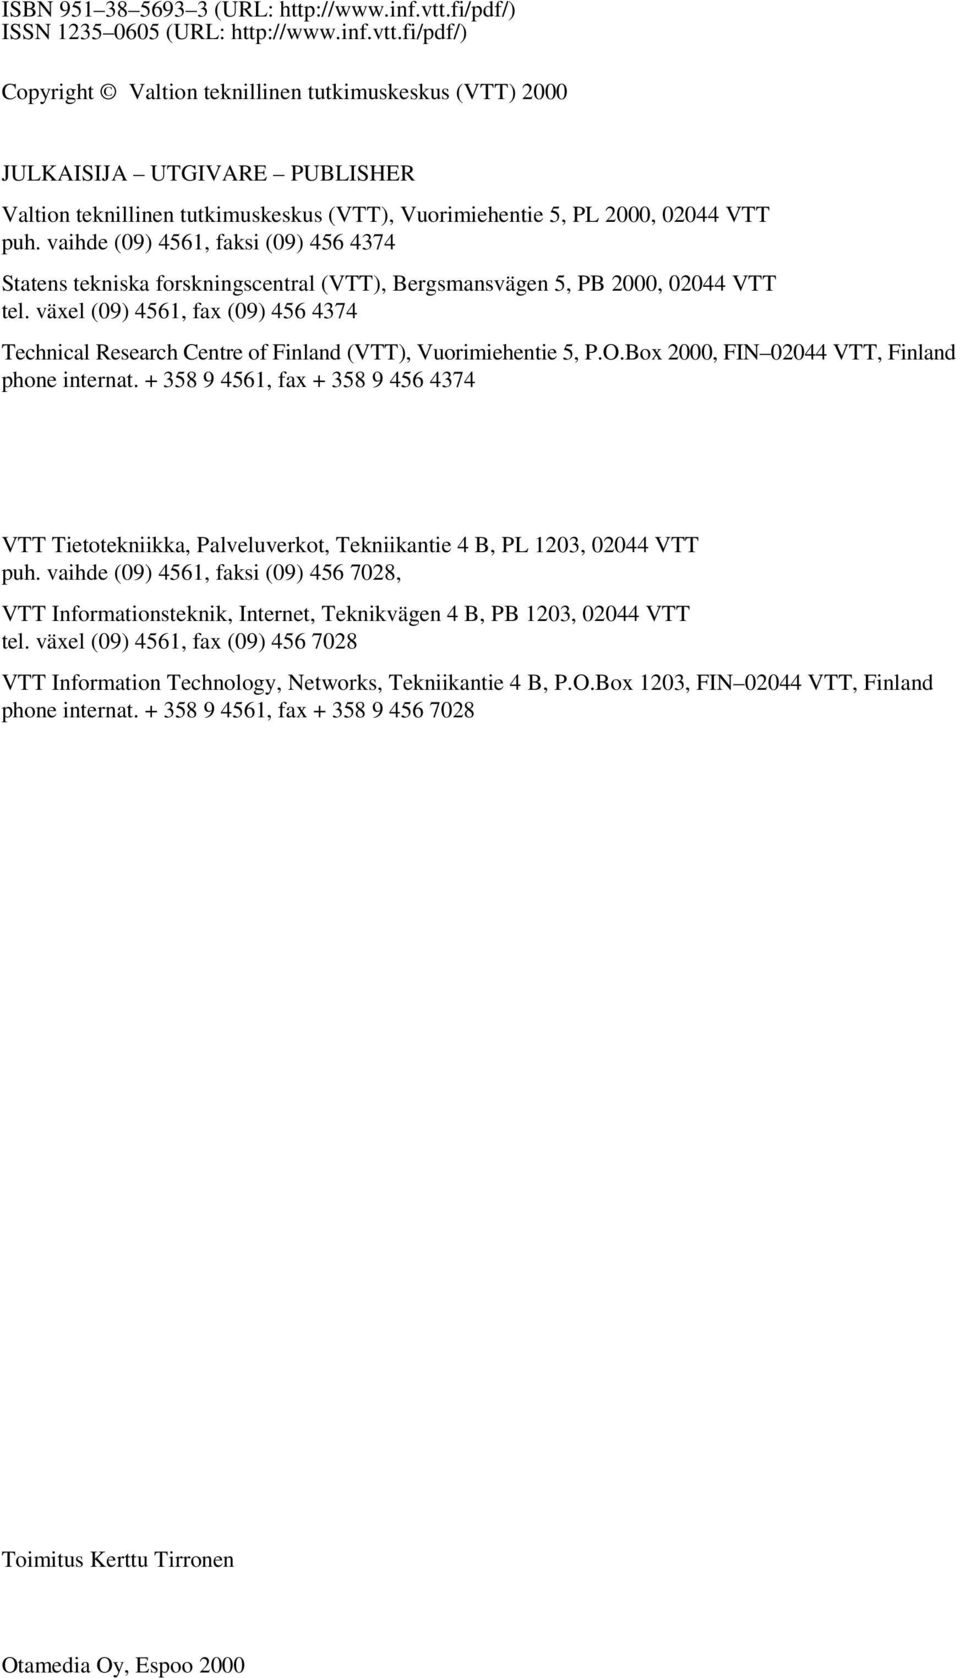 fi/pdf/) Copyright Valtion teknillinen tutkimuskeskus (VTT) 2000 JULKAISIJA UTGIVARE PUBLISHER Valtion teknillinen tutkimuskeskus (VTT), Vuorimiehentie 5, PL 2000, 02044 VTT puh.